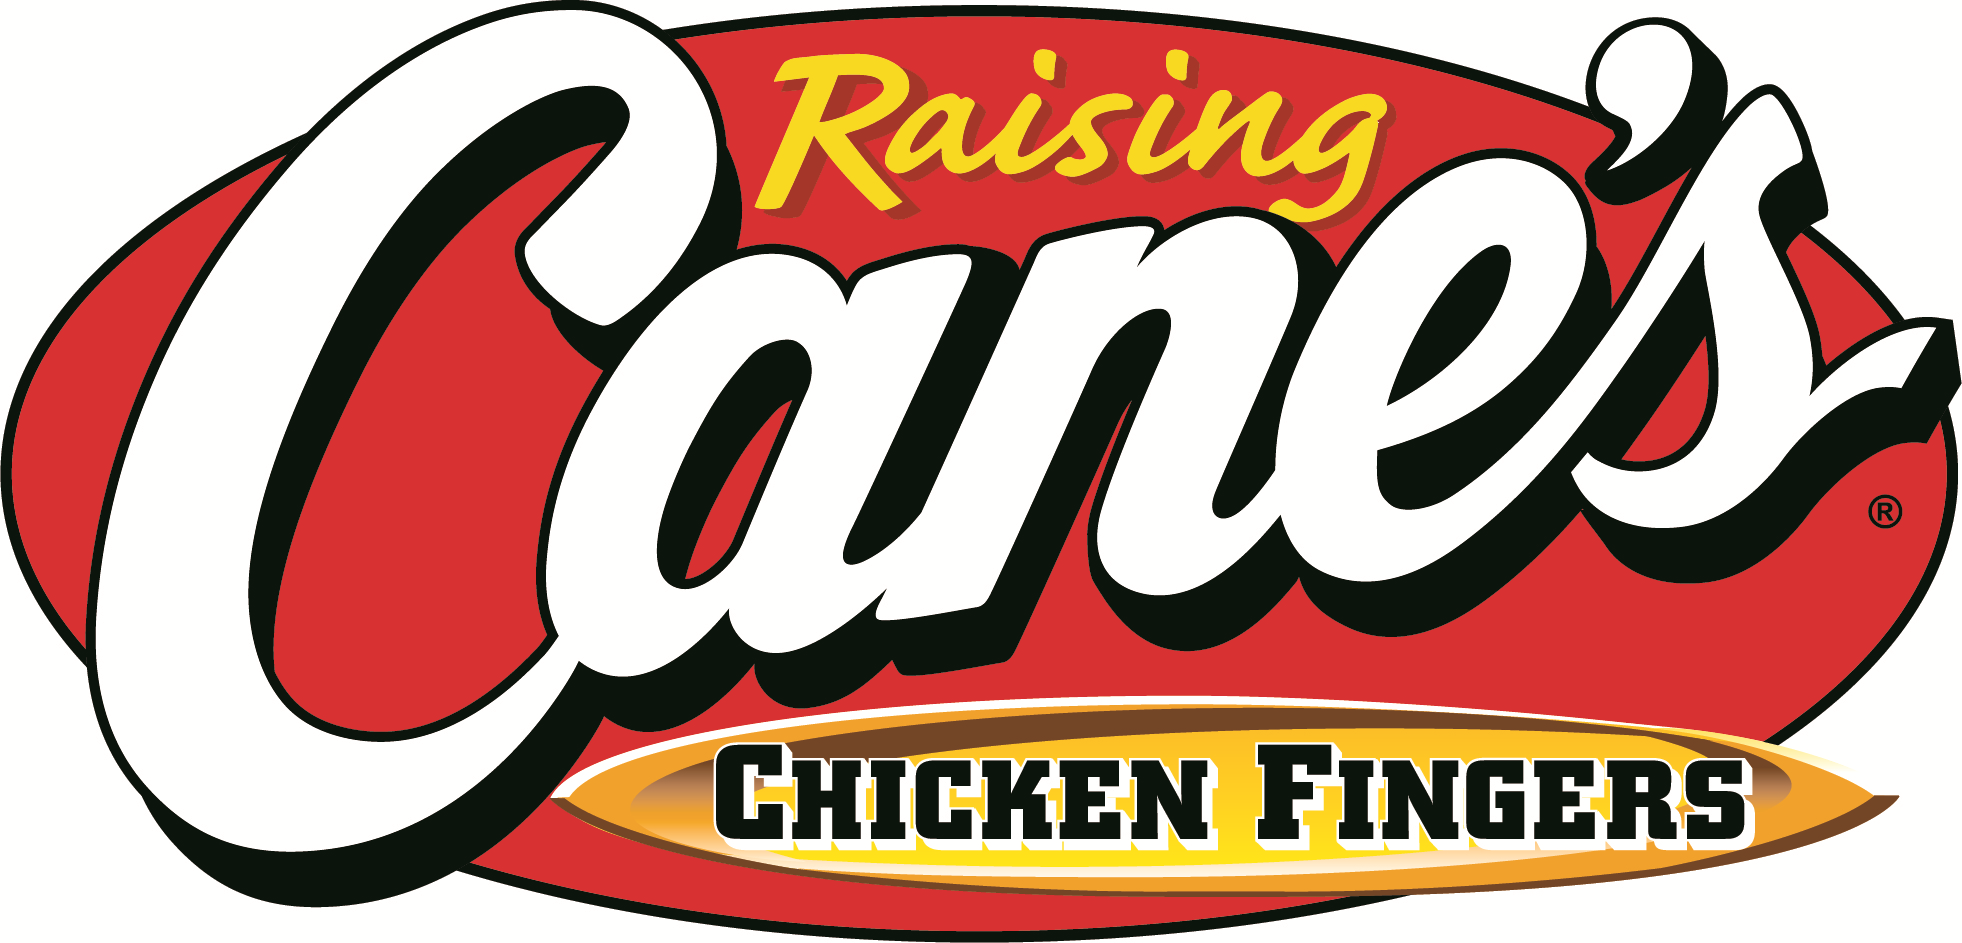 Raising Cane's Chicken Fingers Company Logo